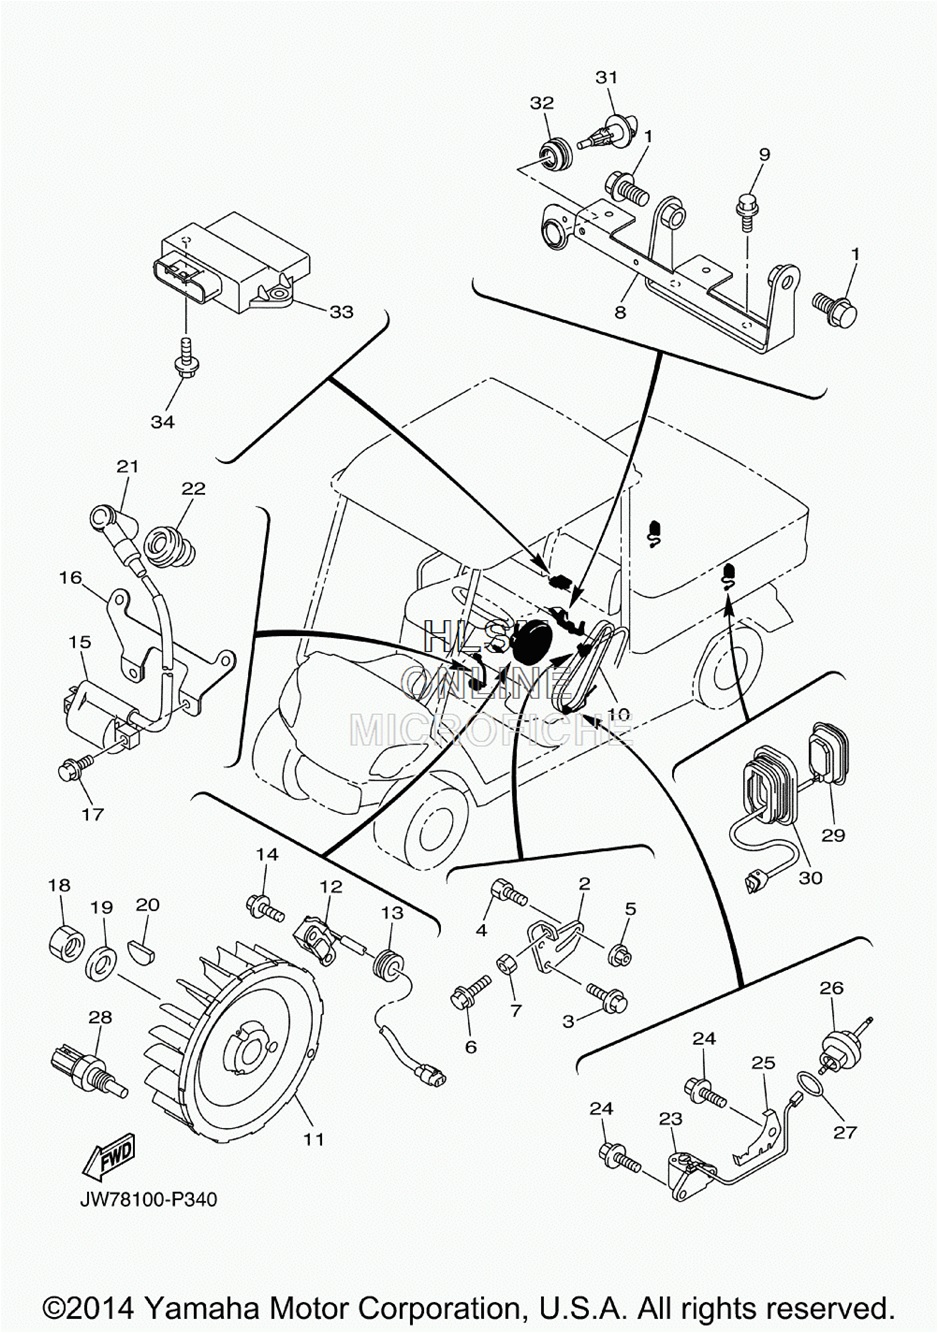 Yamaha G16 Engine Diagram - Wiring Diagram Schemas